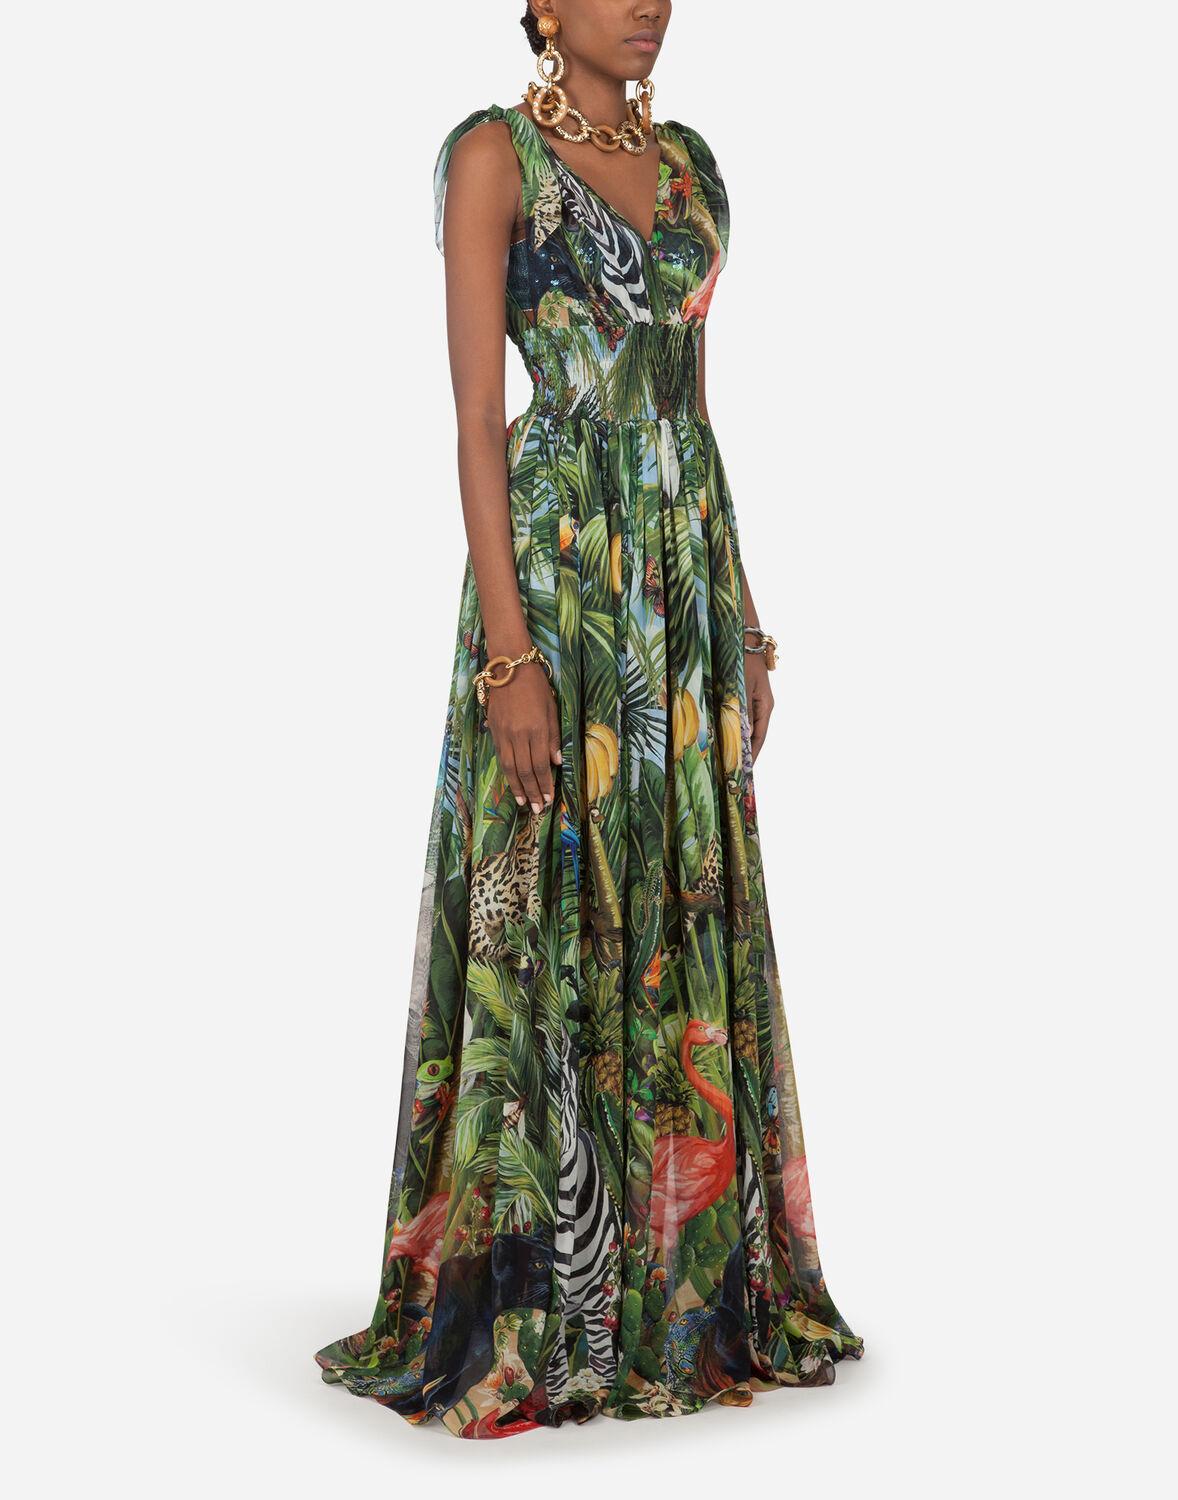 Dolce & Gabbana Silk Long Georgette Dress With Jungle Print in Green - Lyst